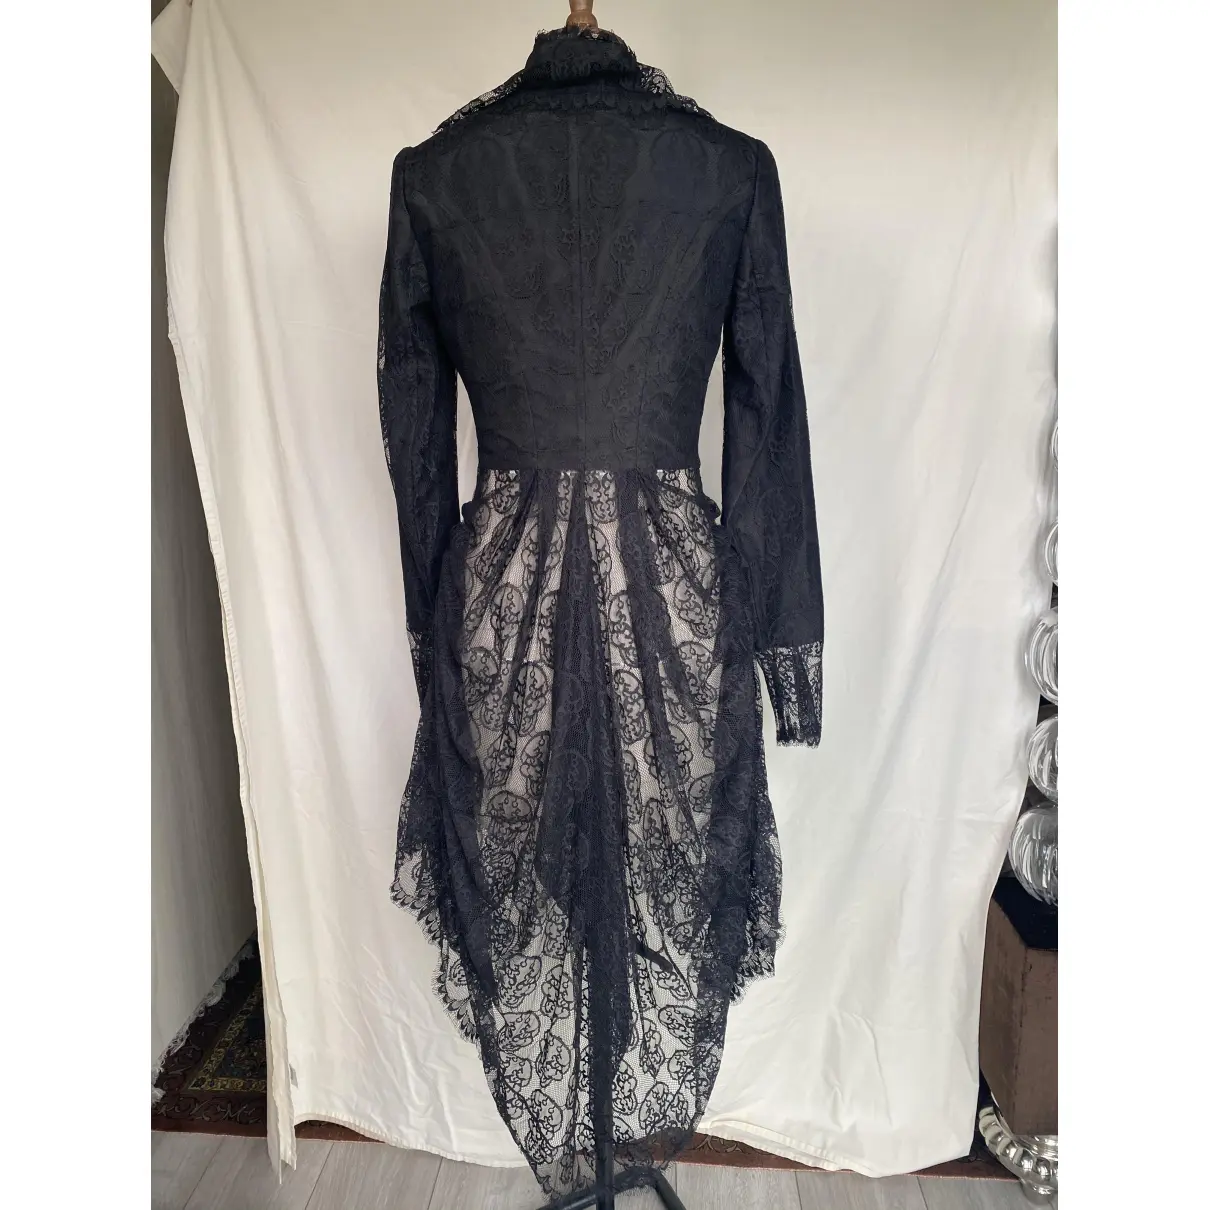 Buy Thomas Wylde Silk dress online